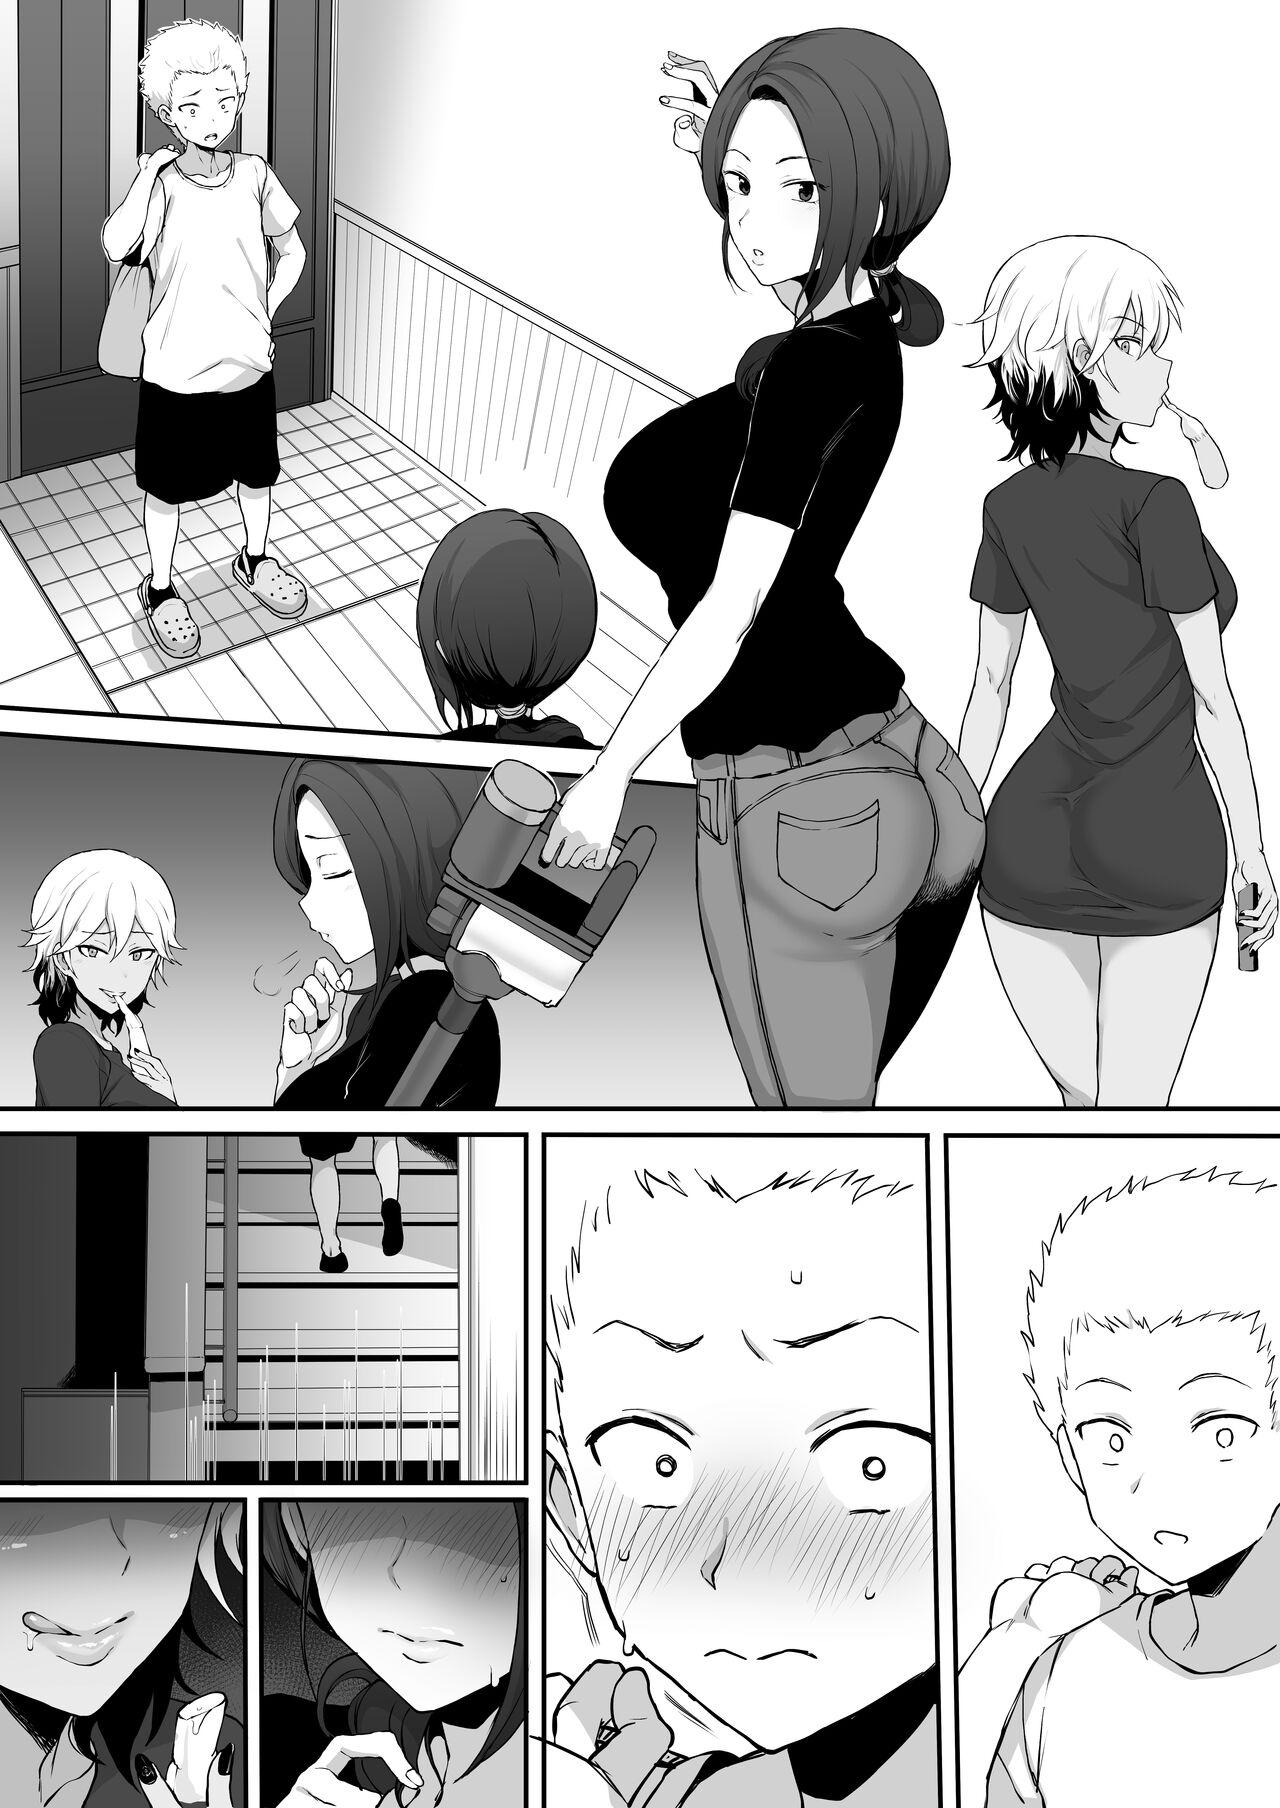 Kokujin no Tenkousei NTR ru Chapters 1-6 part 1 Plus Bonus chapter: Stolen Mother’s Breasts 35